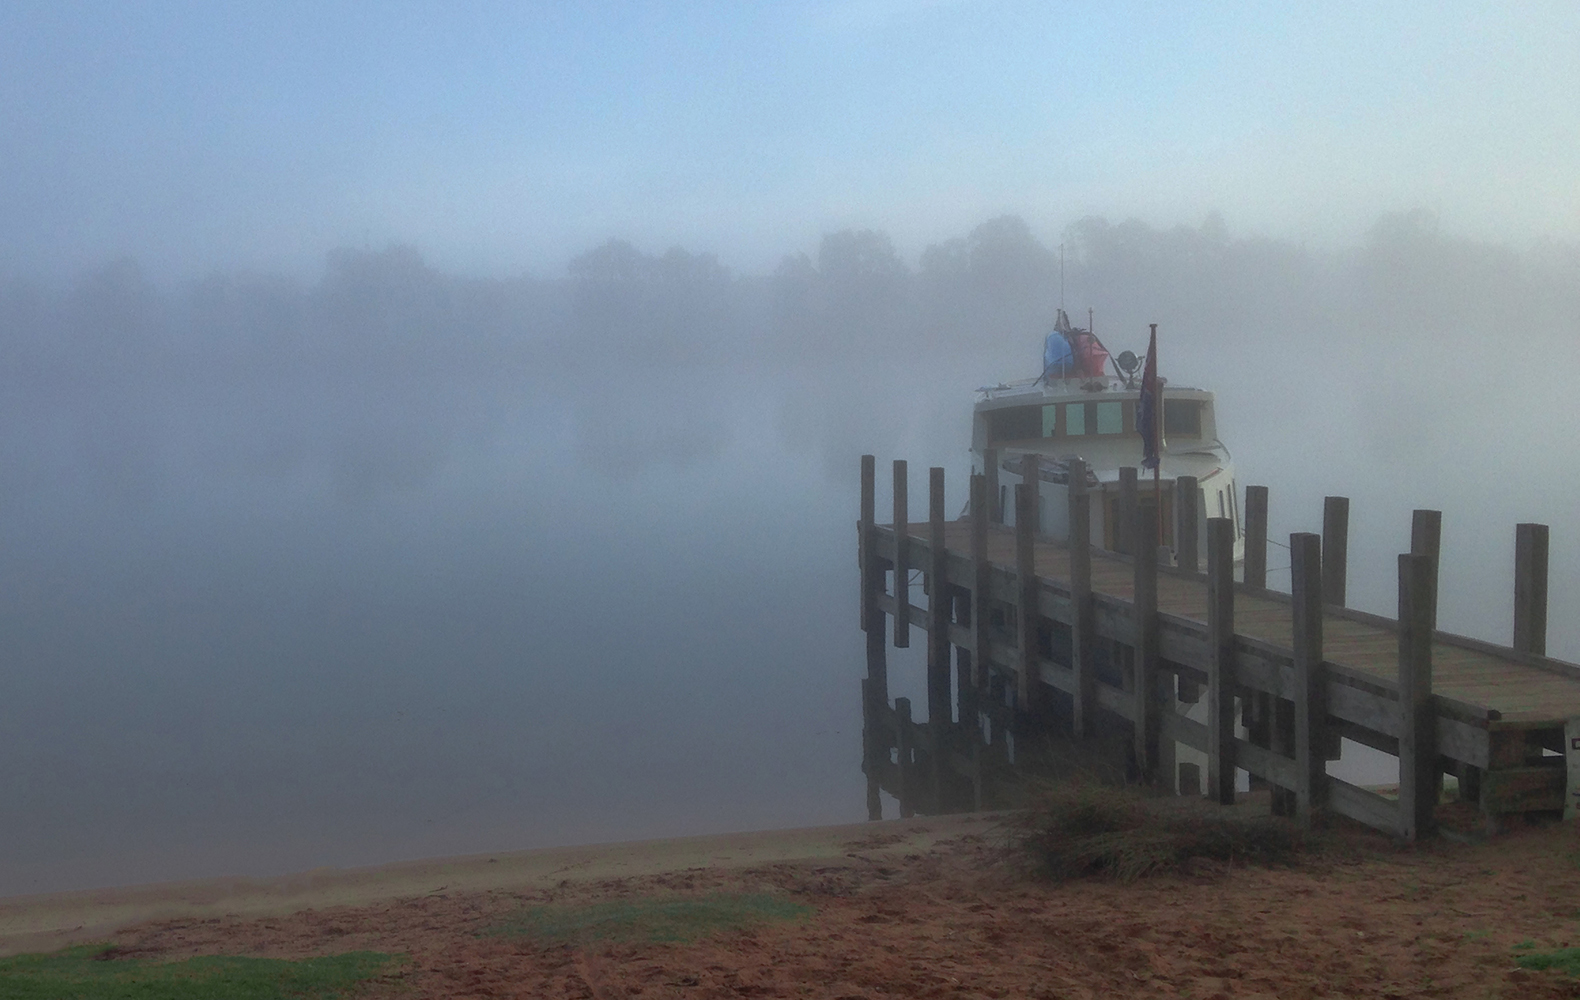 Merit David Watkins Morring Fog on the River July 2020   Abstract